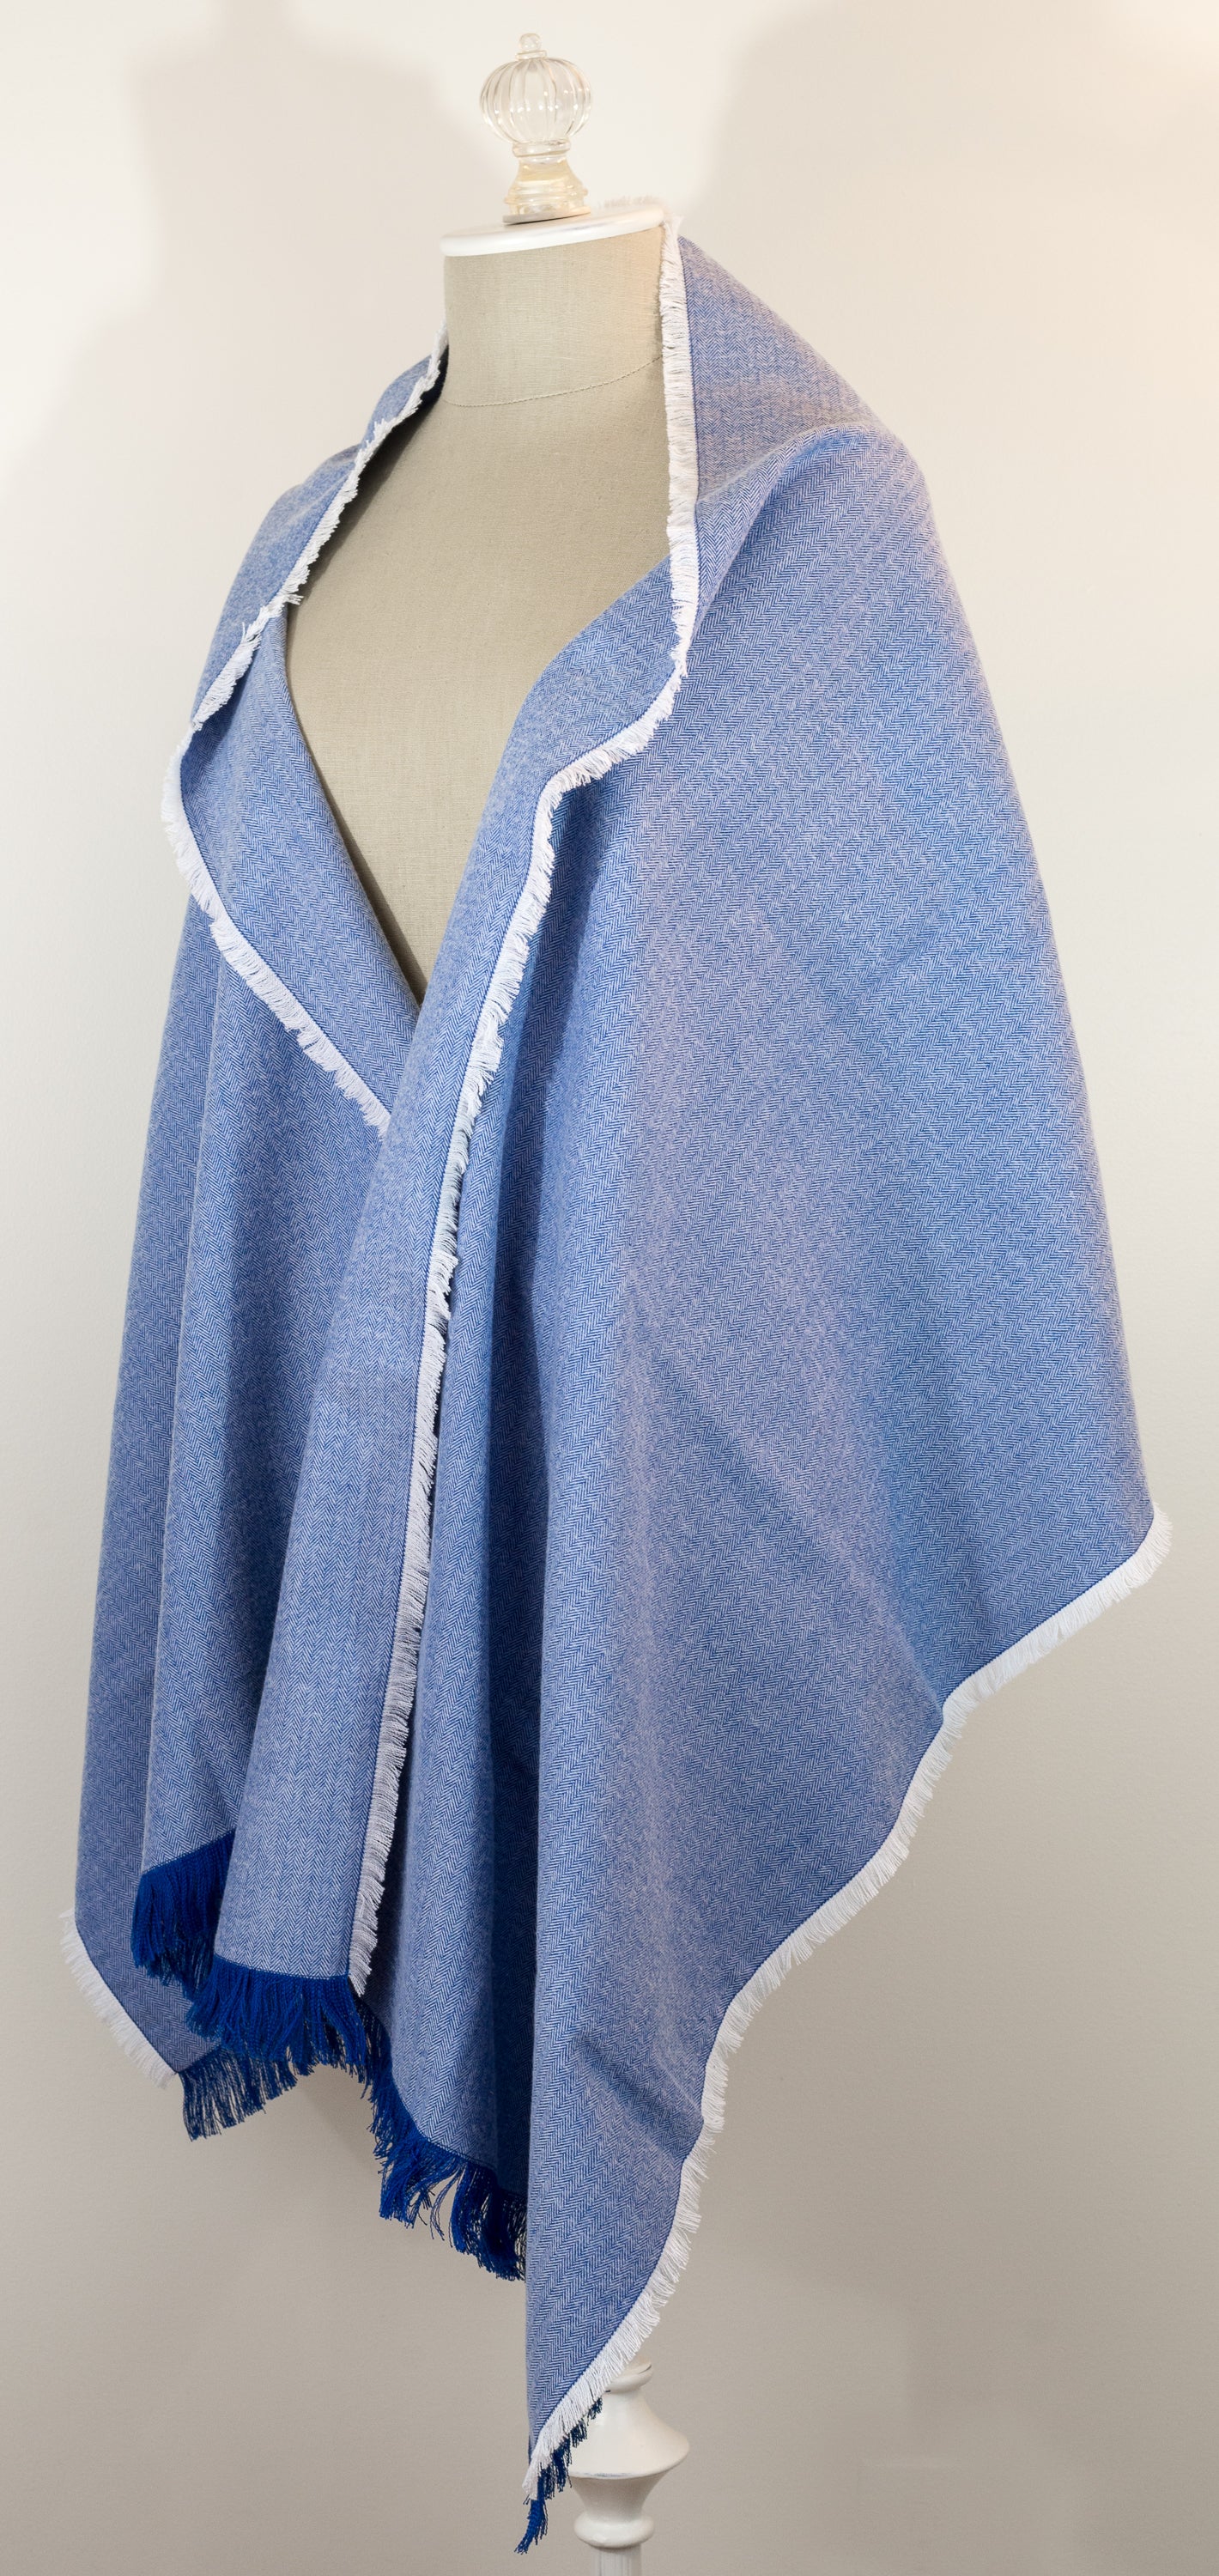 Blue Herringbone Flannel Blanket Scarf 23" x 72" Shawl with Kilt Pin